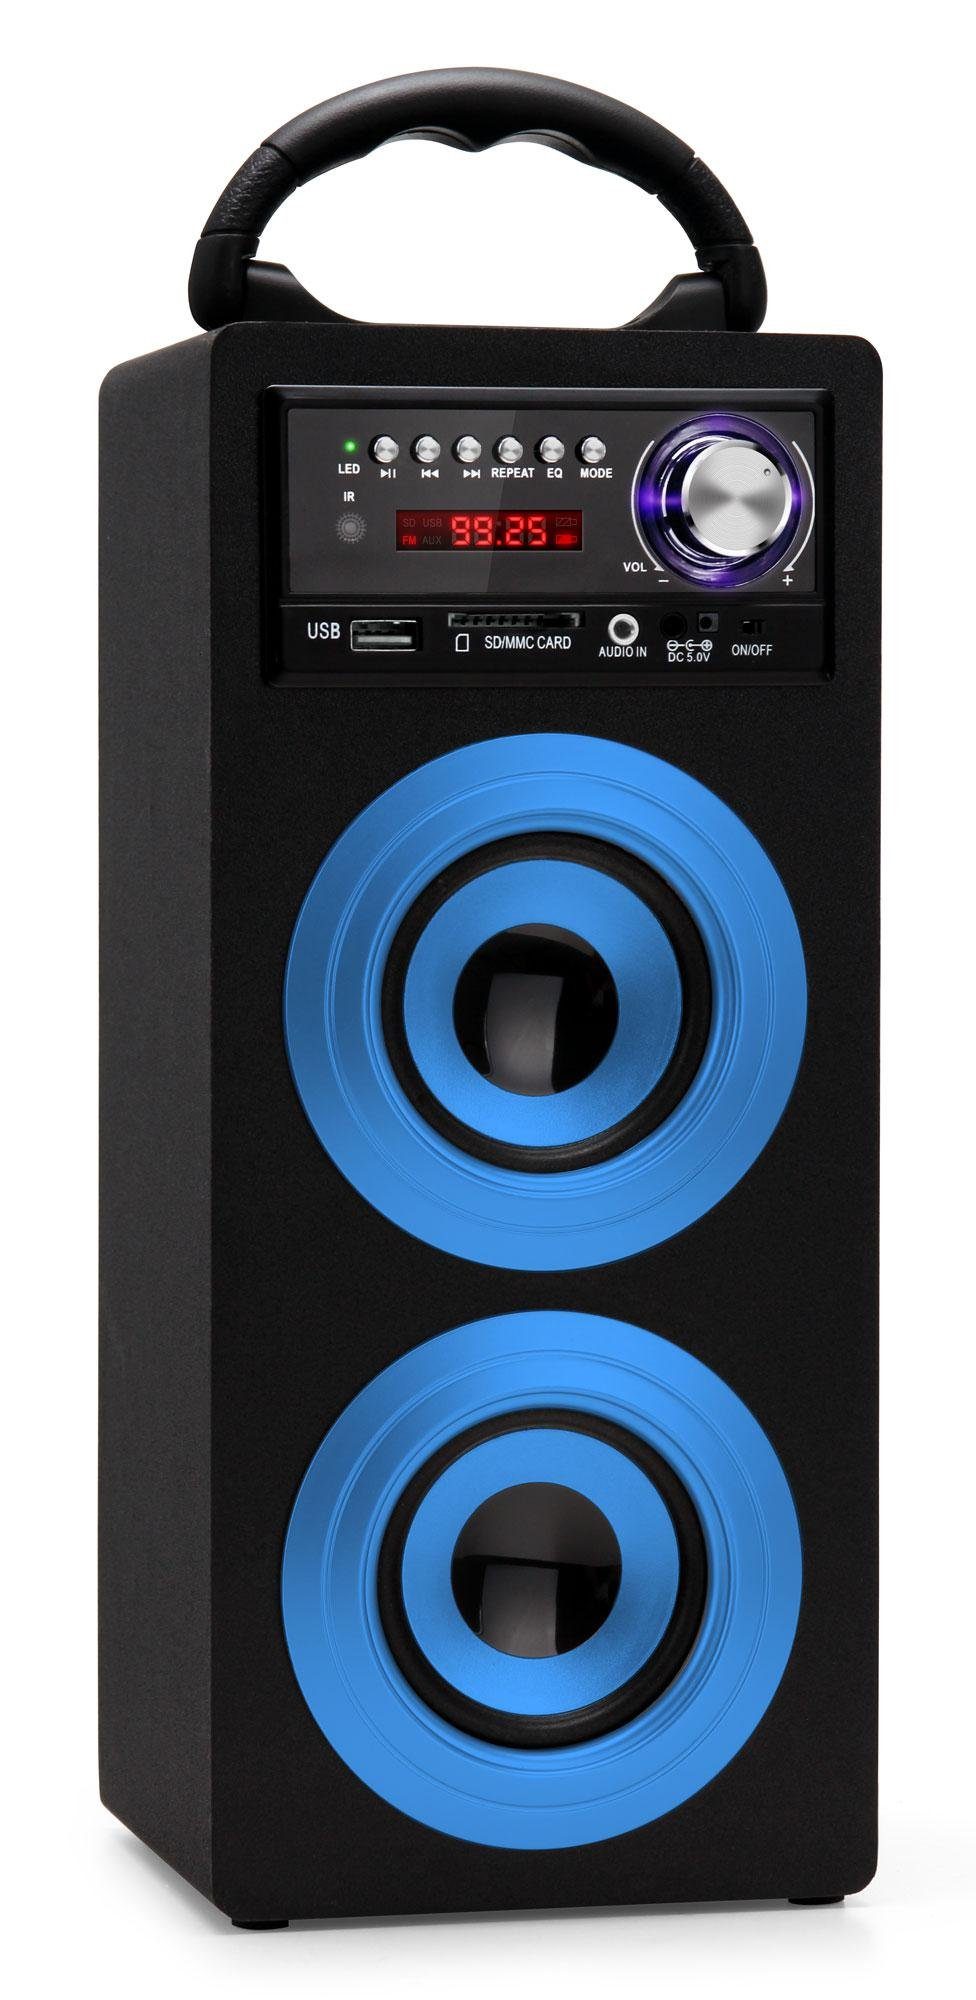 BLUETOOTH AKKU STEREO LAUTSPRECHER TRAGBARE RADIO TUNER SD CARD USB AUX Blau 